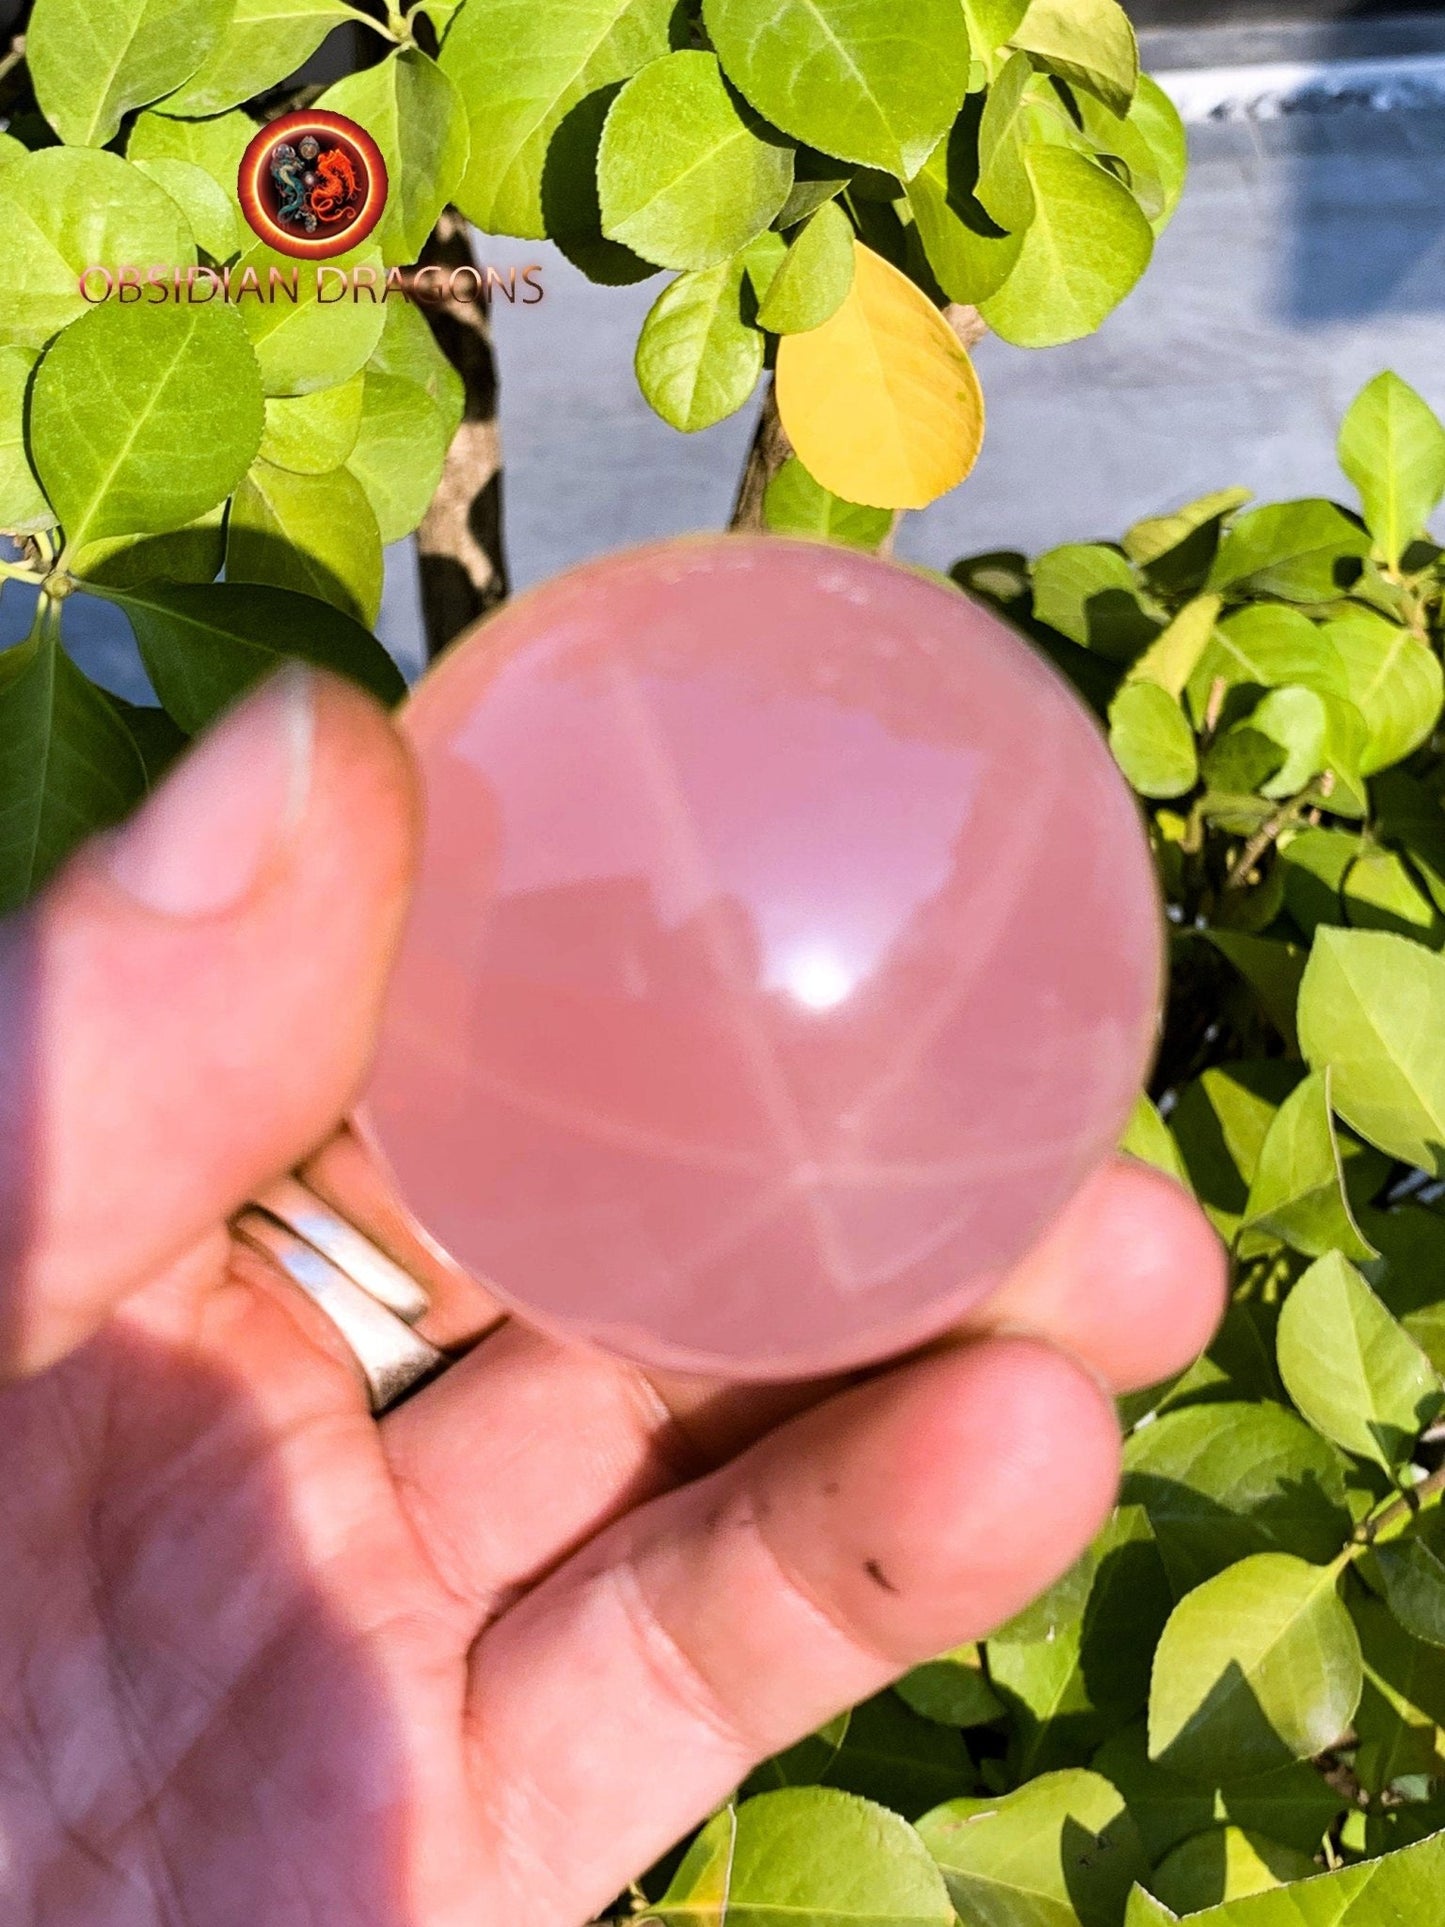 Sphère, quartz rose étoilé, quartz rose astérié ou quartz rose astérisé. Provenance du Mozambique. quartz rose naturel. 52mm de diamètre - obsidian dragon